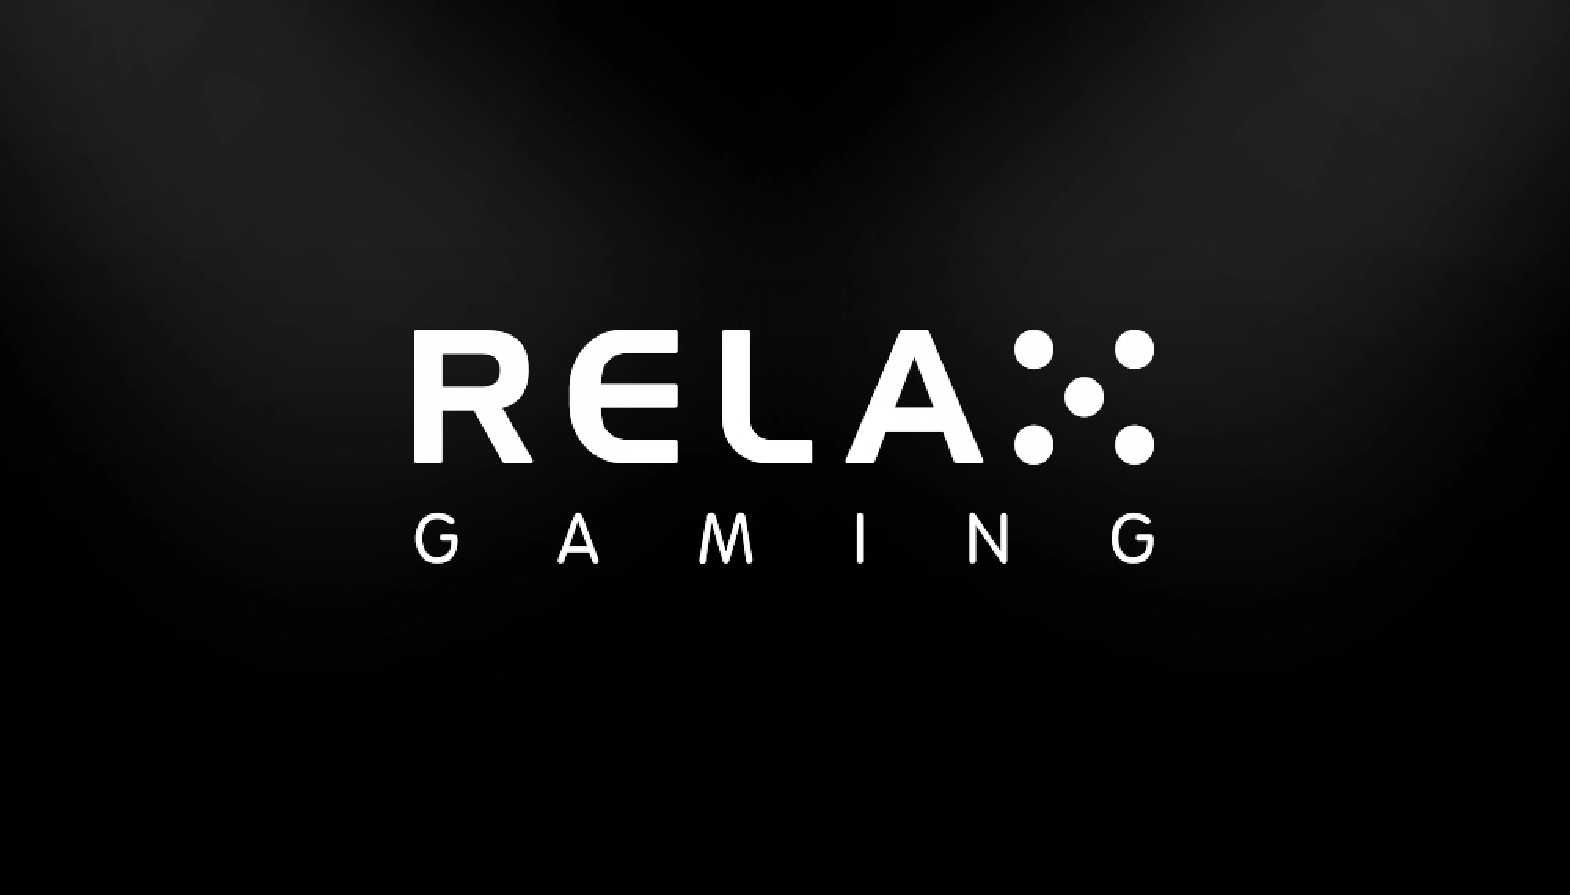 1win рдкрд░ Relax Gaming рдЧреЗрдо рдкреНрд░рджрд╛рддрд╛